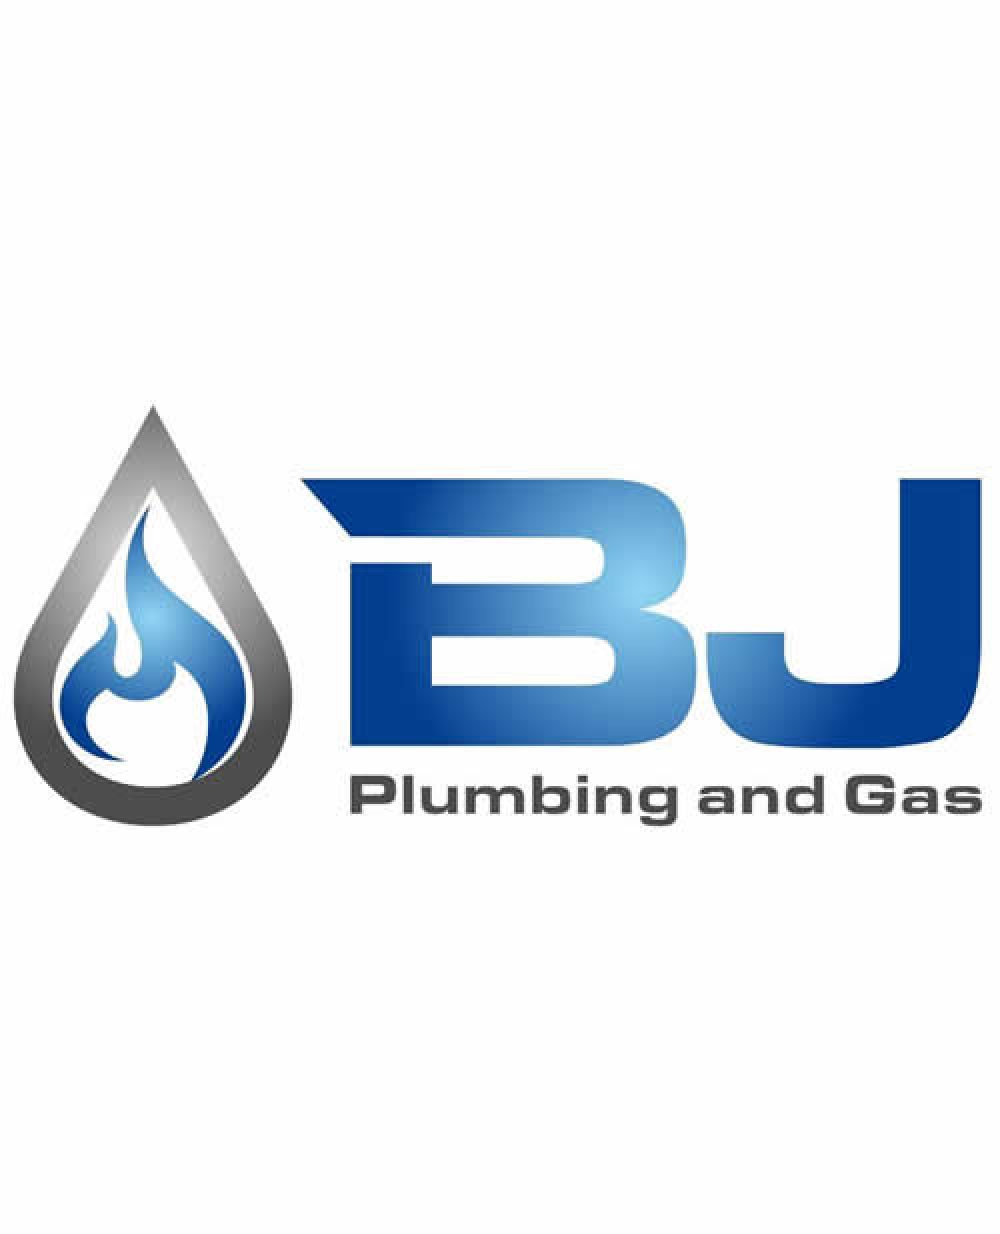 Bj Plumbing And Gas Gawler Business Development Group